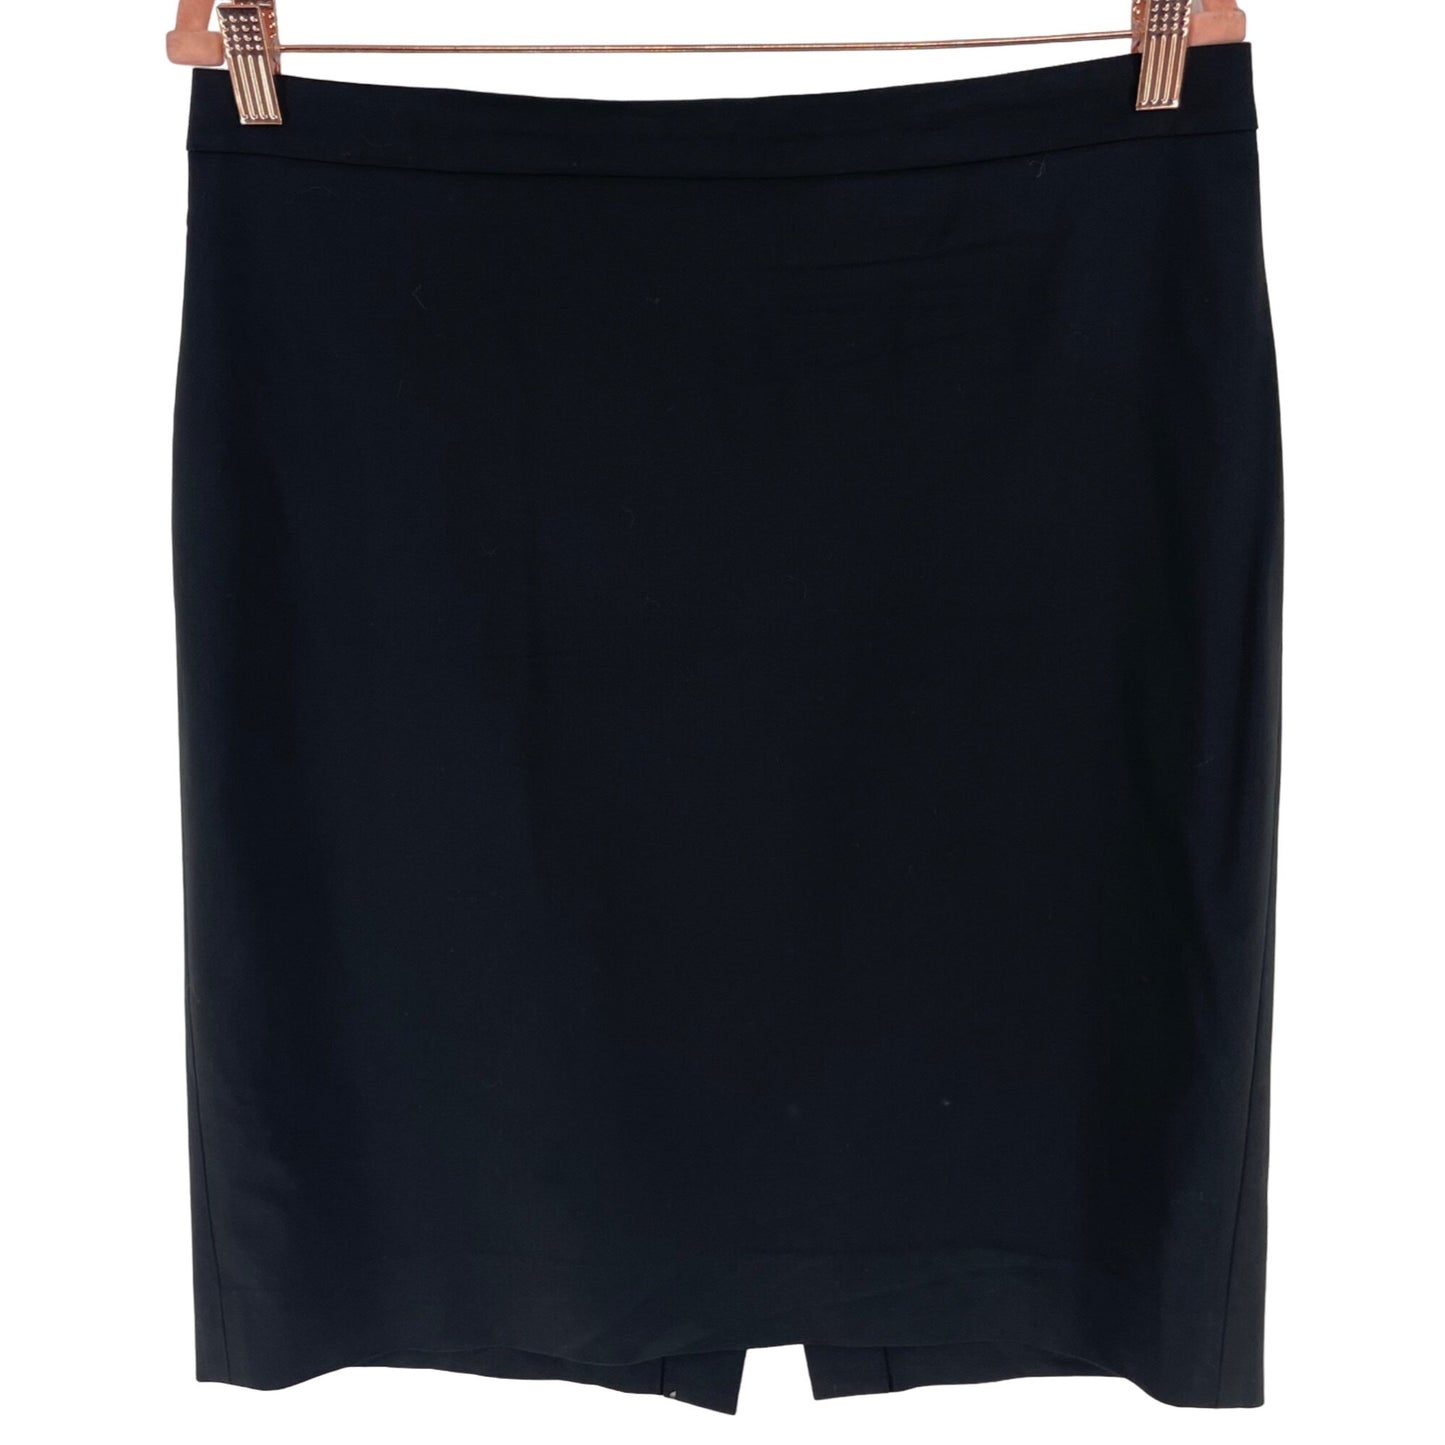 J. Crew 365 Women's Size 10 Black Wool Blend No. 2 Pencil Skirt